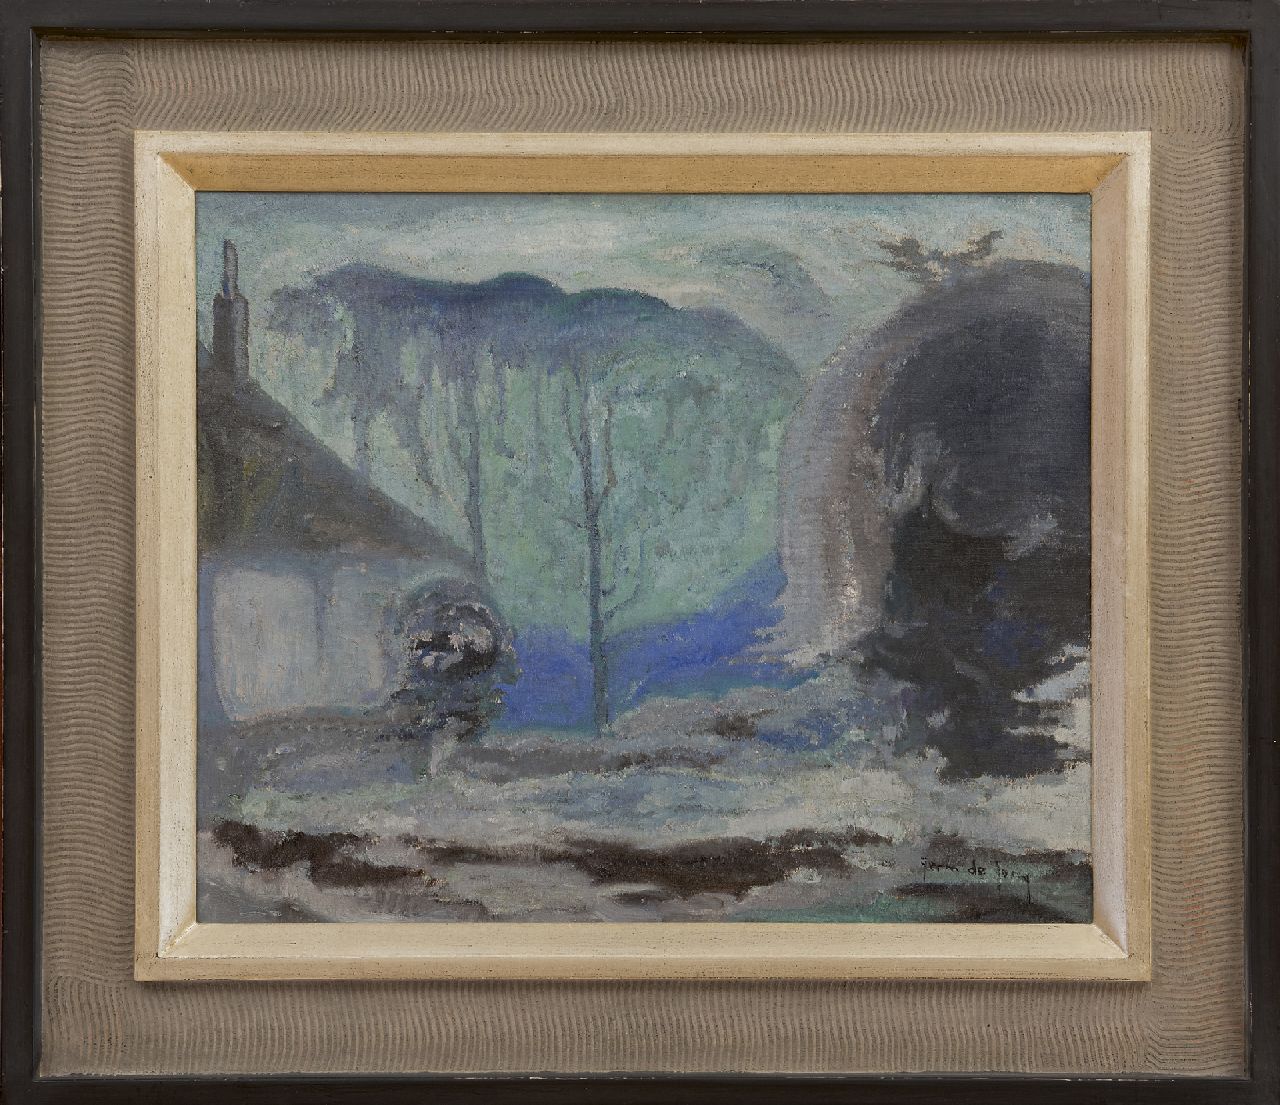 Jong G. de | Gerben 'Germ' de Jong | Paintings offered for sale | A winter landscape, oil on canvas 41.2 x 50.0 cm, signed l.r. and painted circa 1918